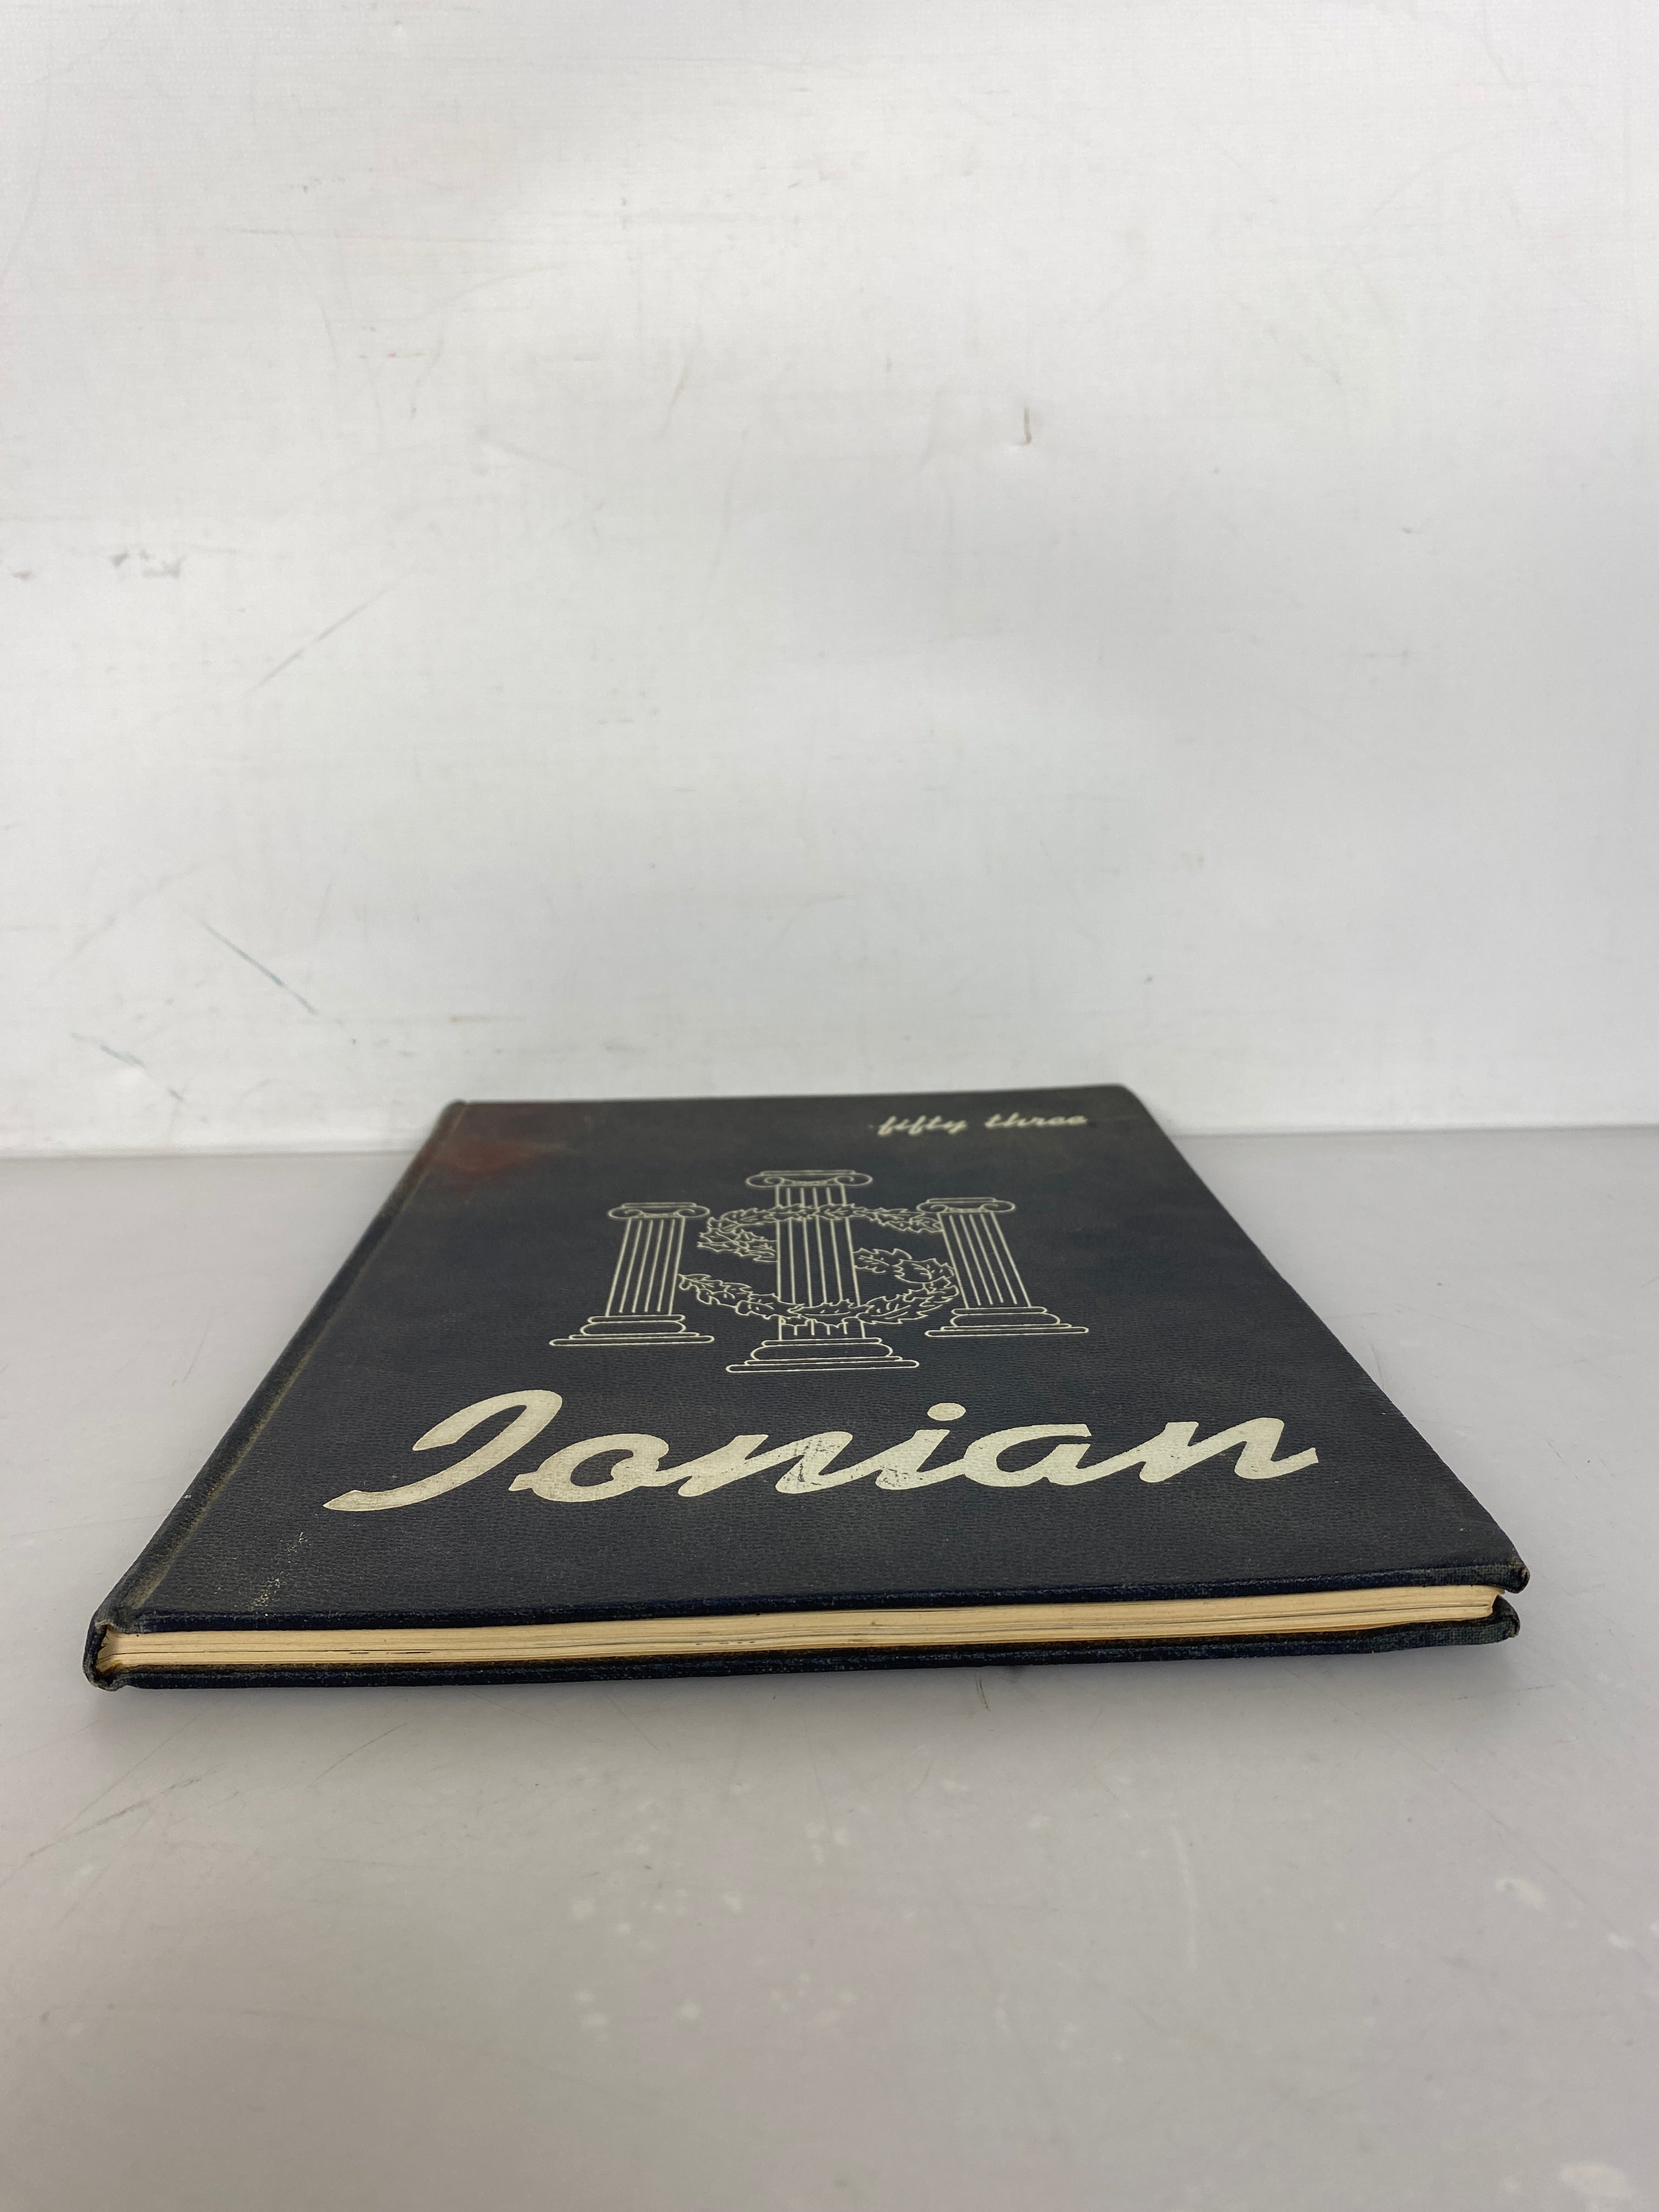 1953 Ionia High School "Ionian" Ionia Michigan